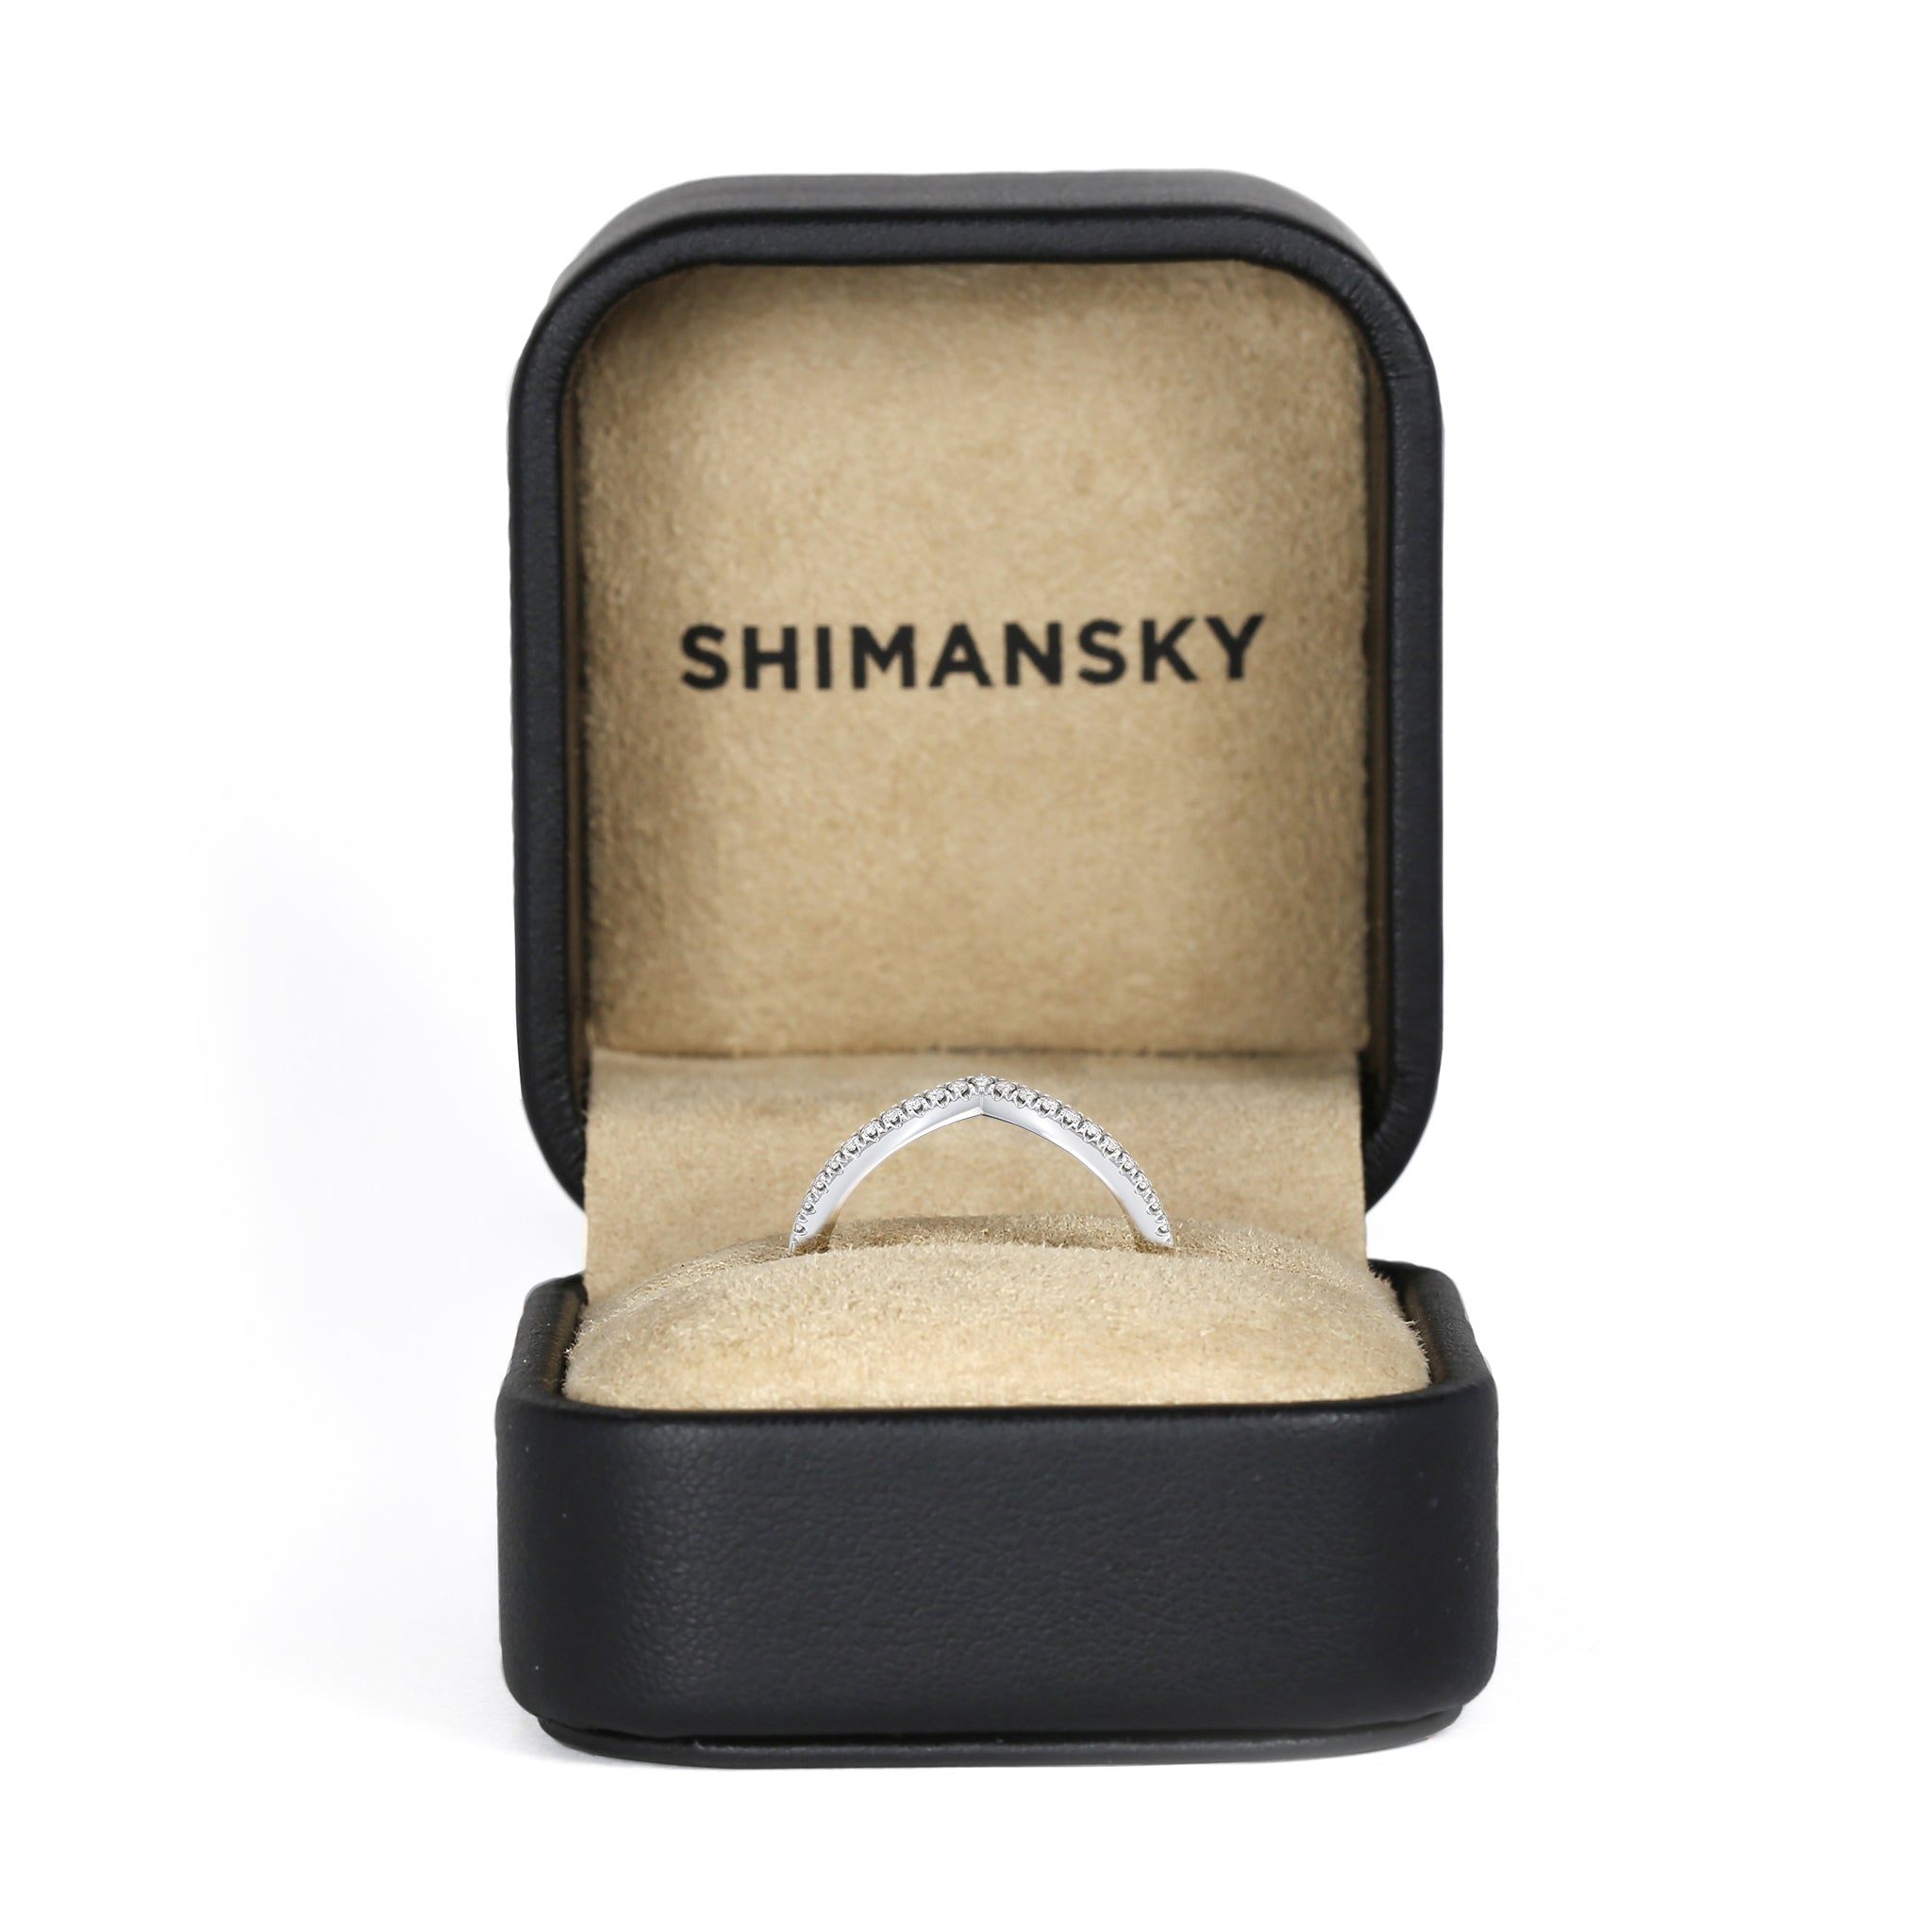 Shimansky - Wishbone Ladies Wedding Band Crafted in 18K White Gold